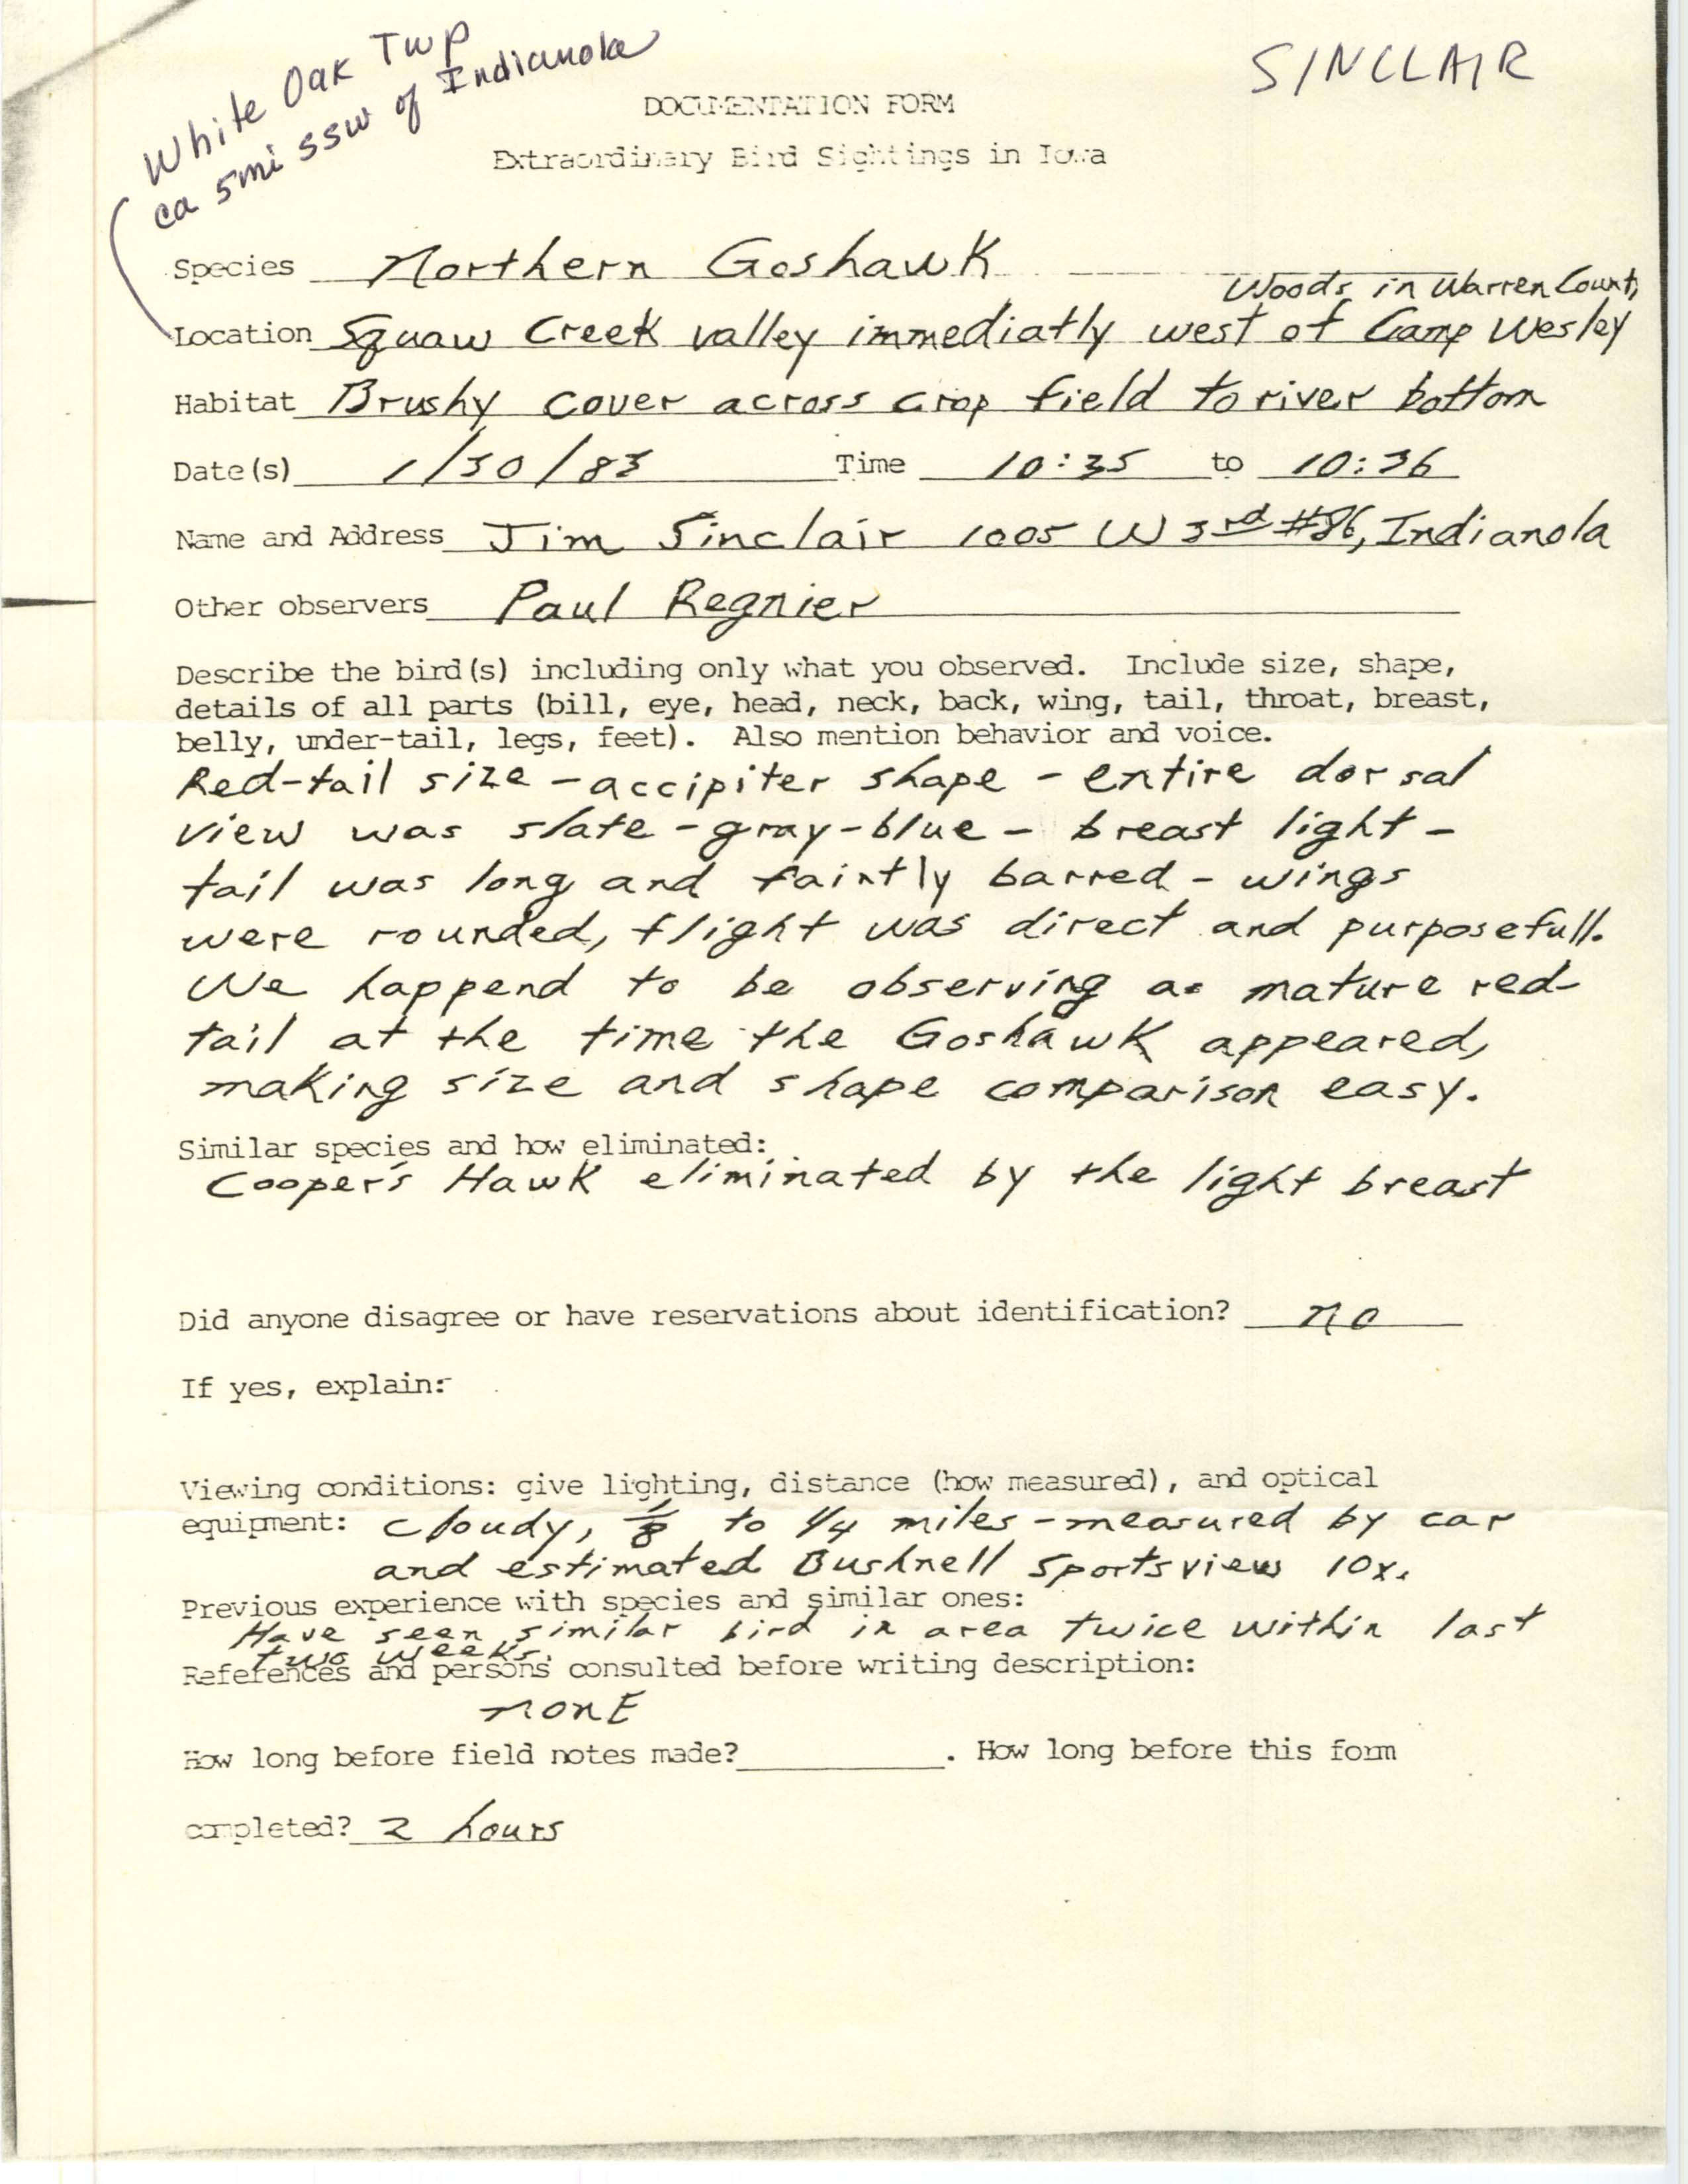 Rare bird documentation form for Northern Goshawk at Camp Wesley Woods, 1983